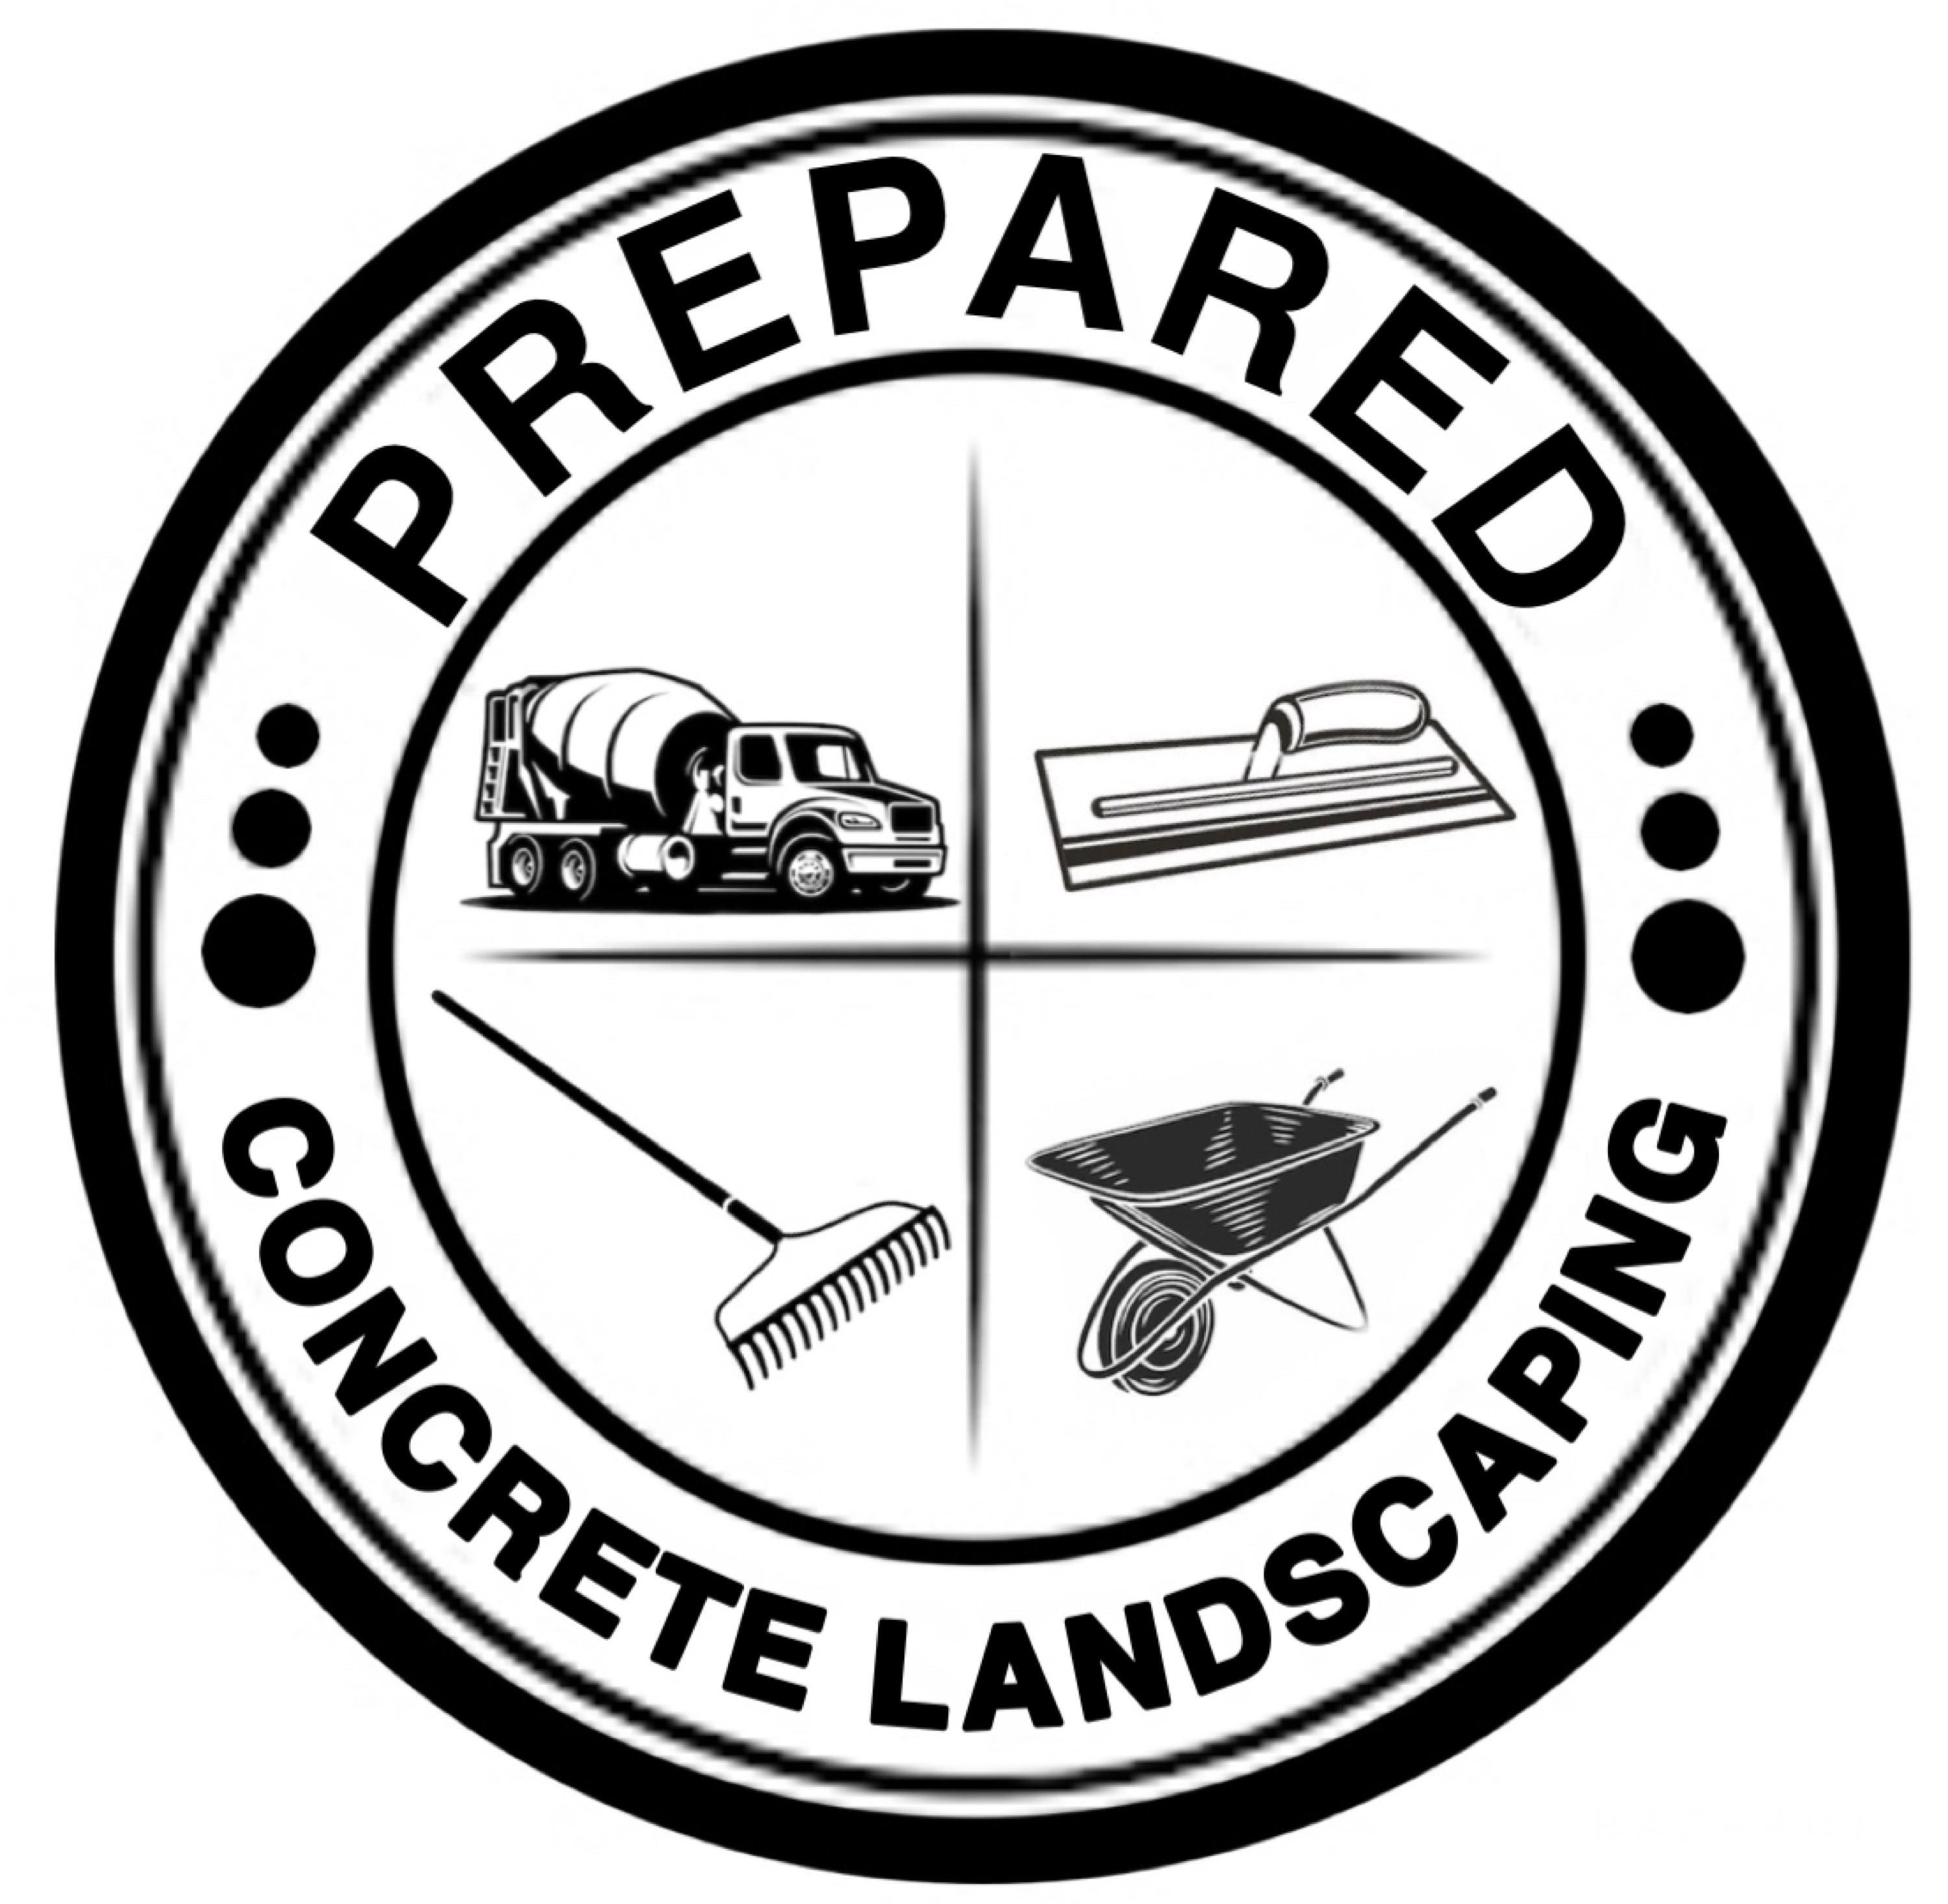 Prepared Concrete Landscaping Logo